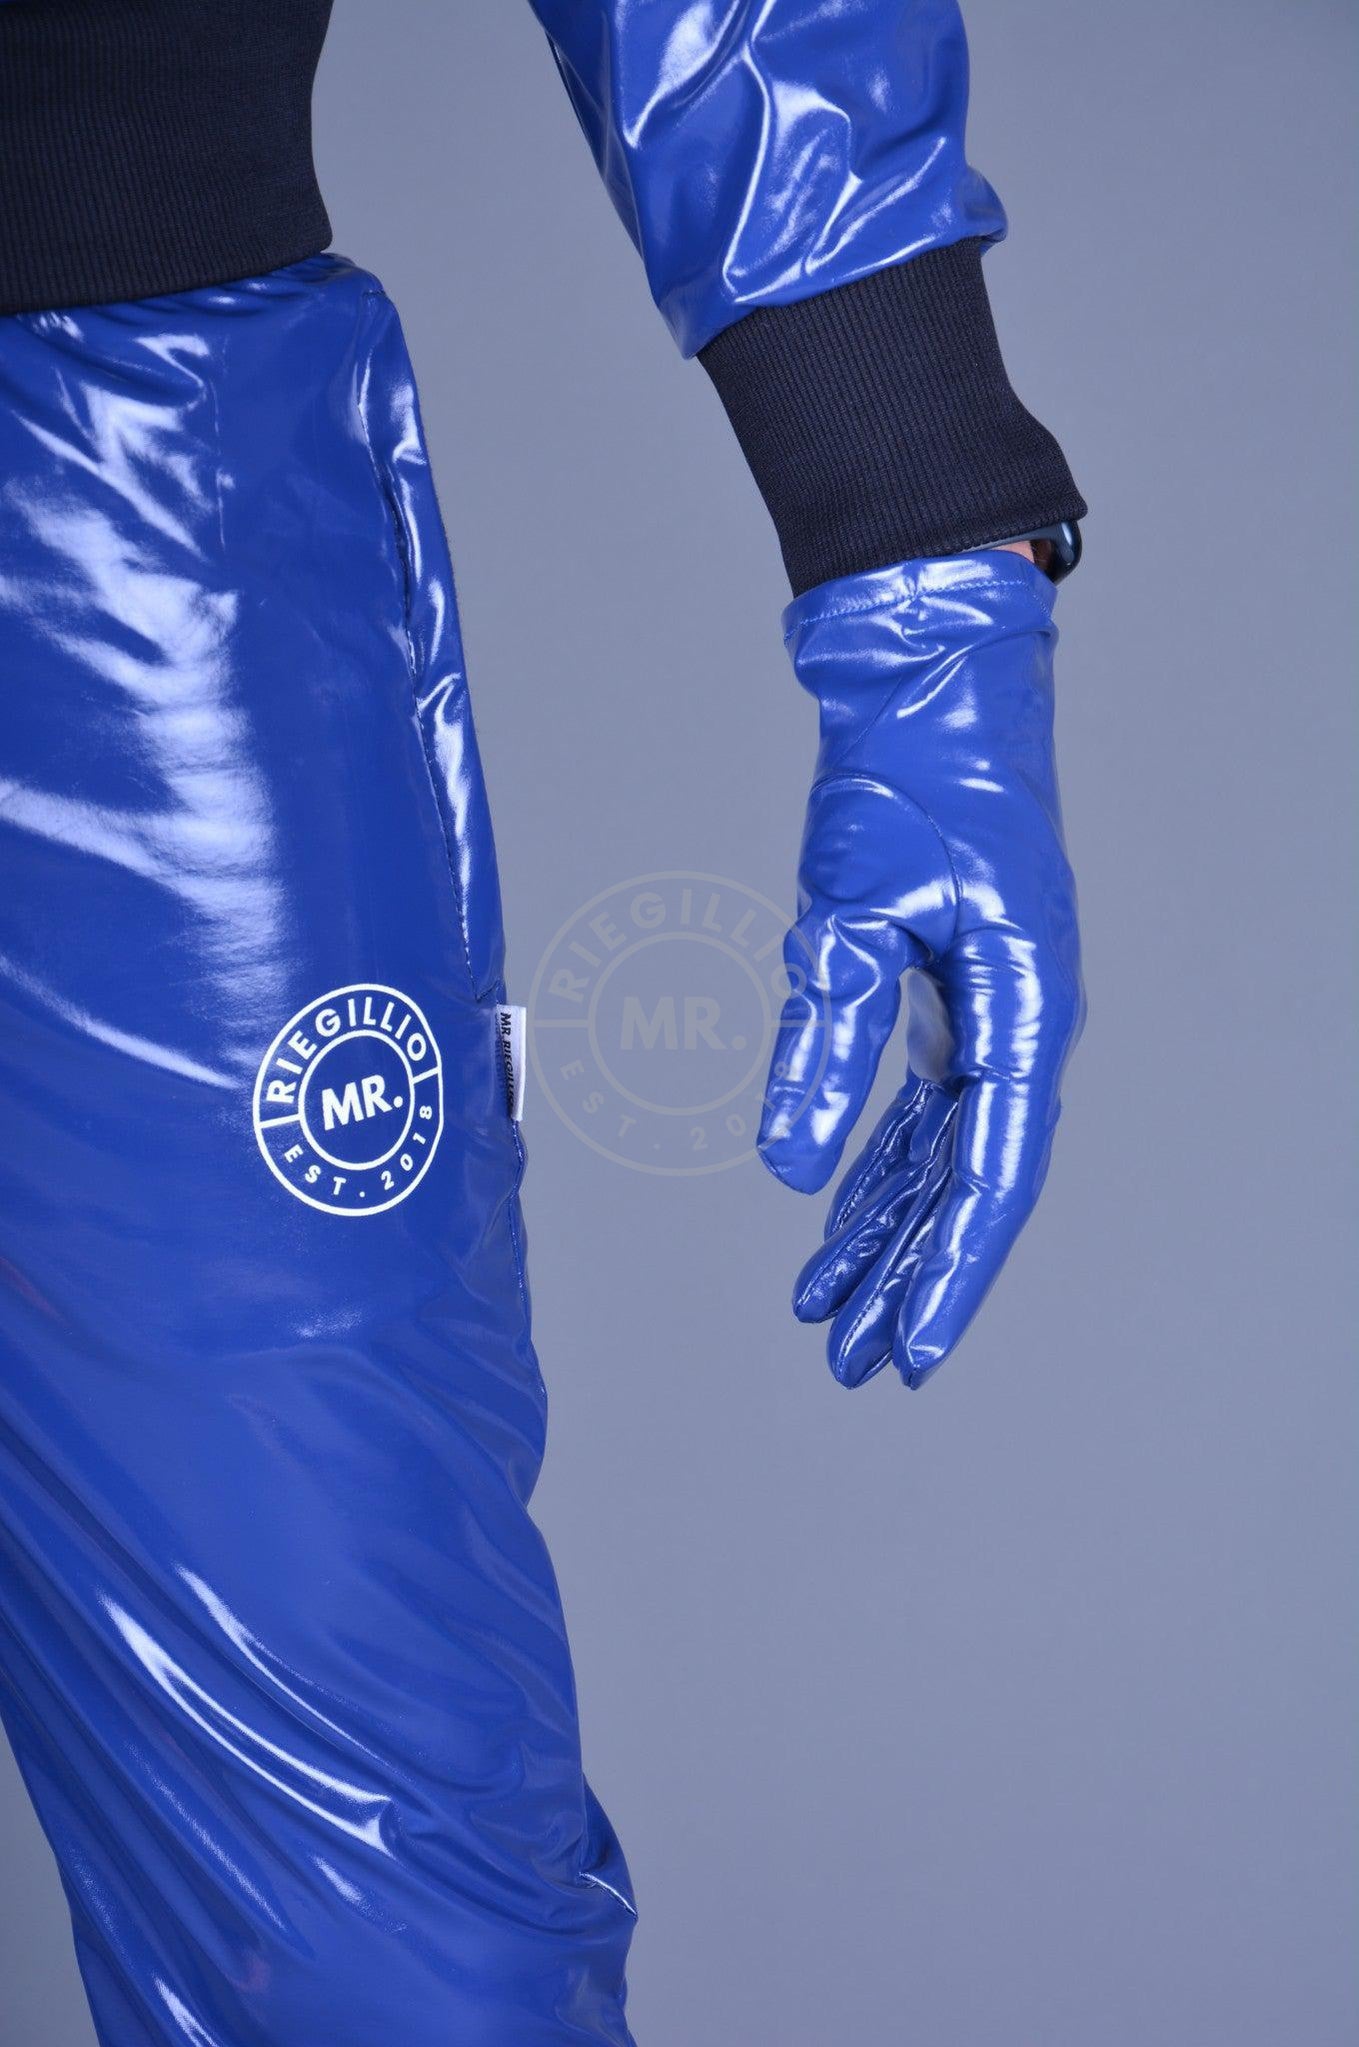 Blue PVC Gloves-at MR. Riegillio